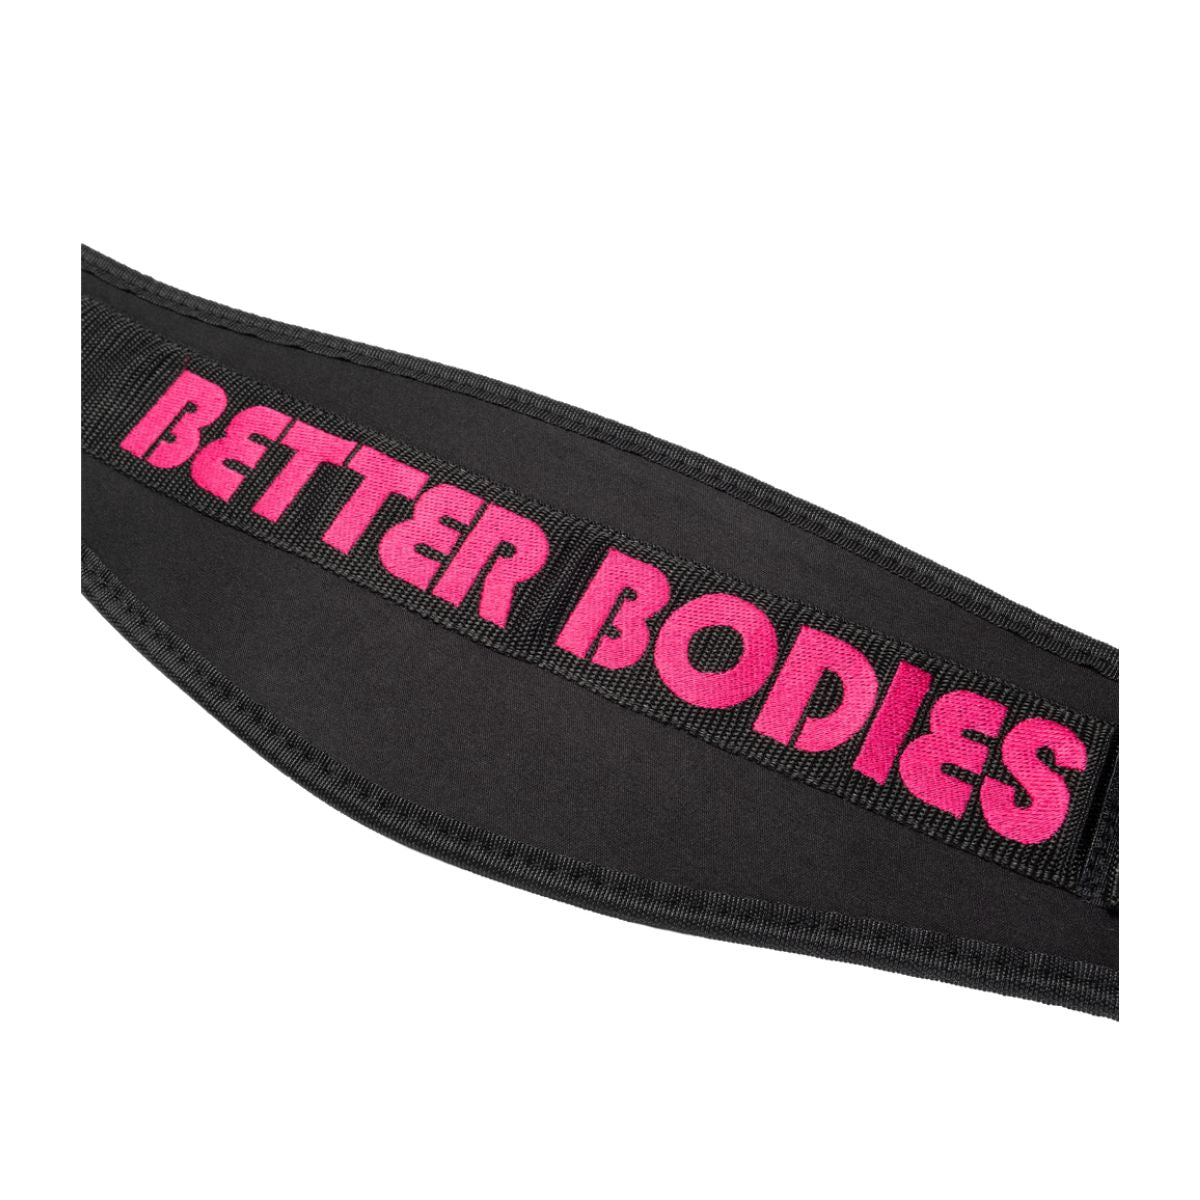 Better Bodies Womens Gym Belt Träningsbälte